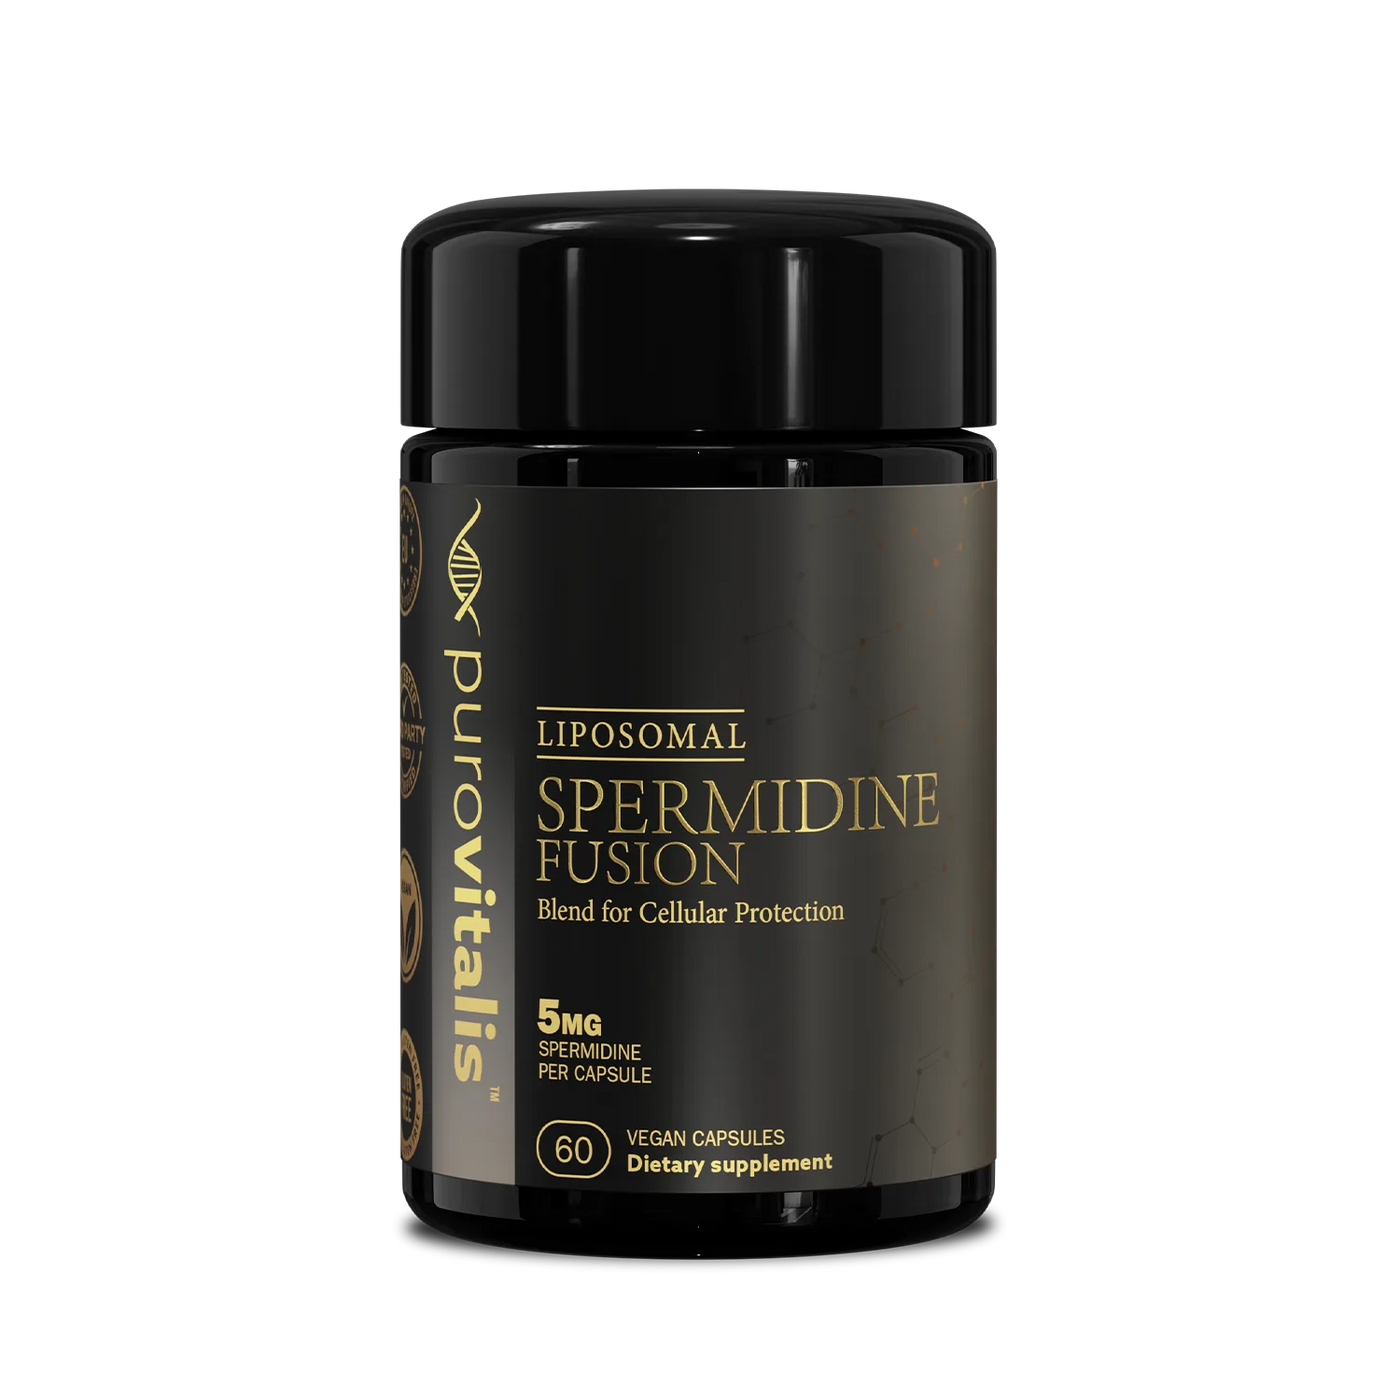 Buy Spermdine Fusion supplement, 5mg high dose liposomal capsules from purovitalis